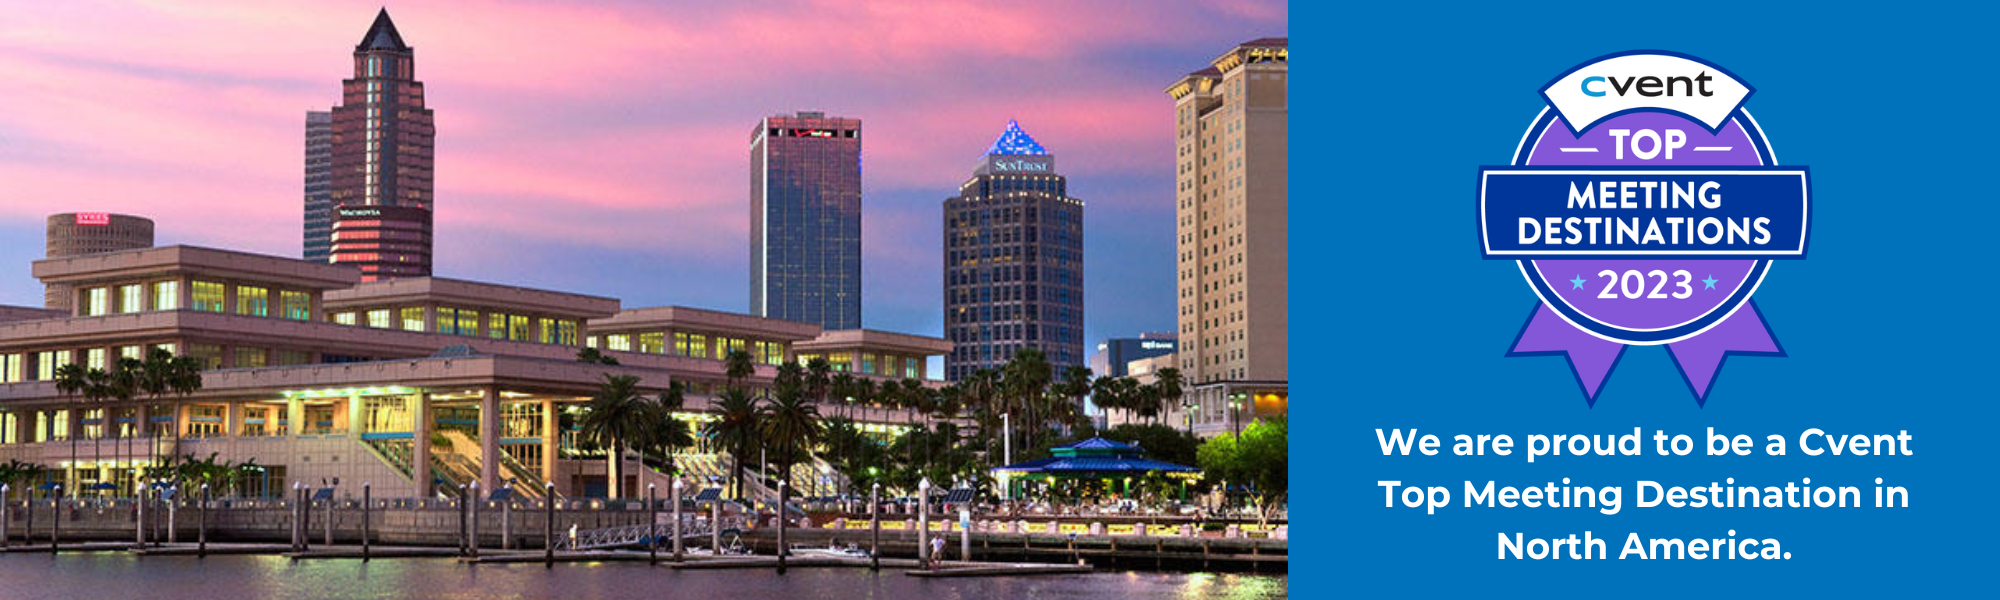 Tampa Convention Center Top Meeting Destination